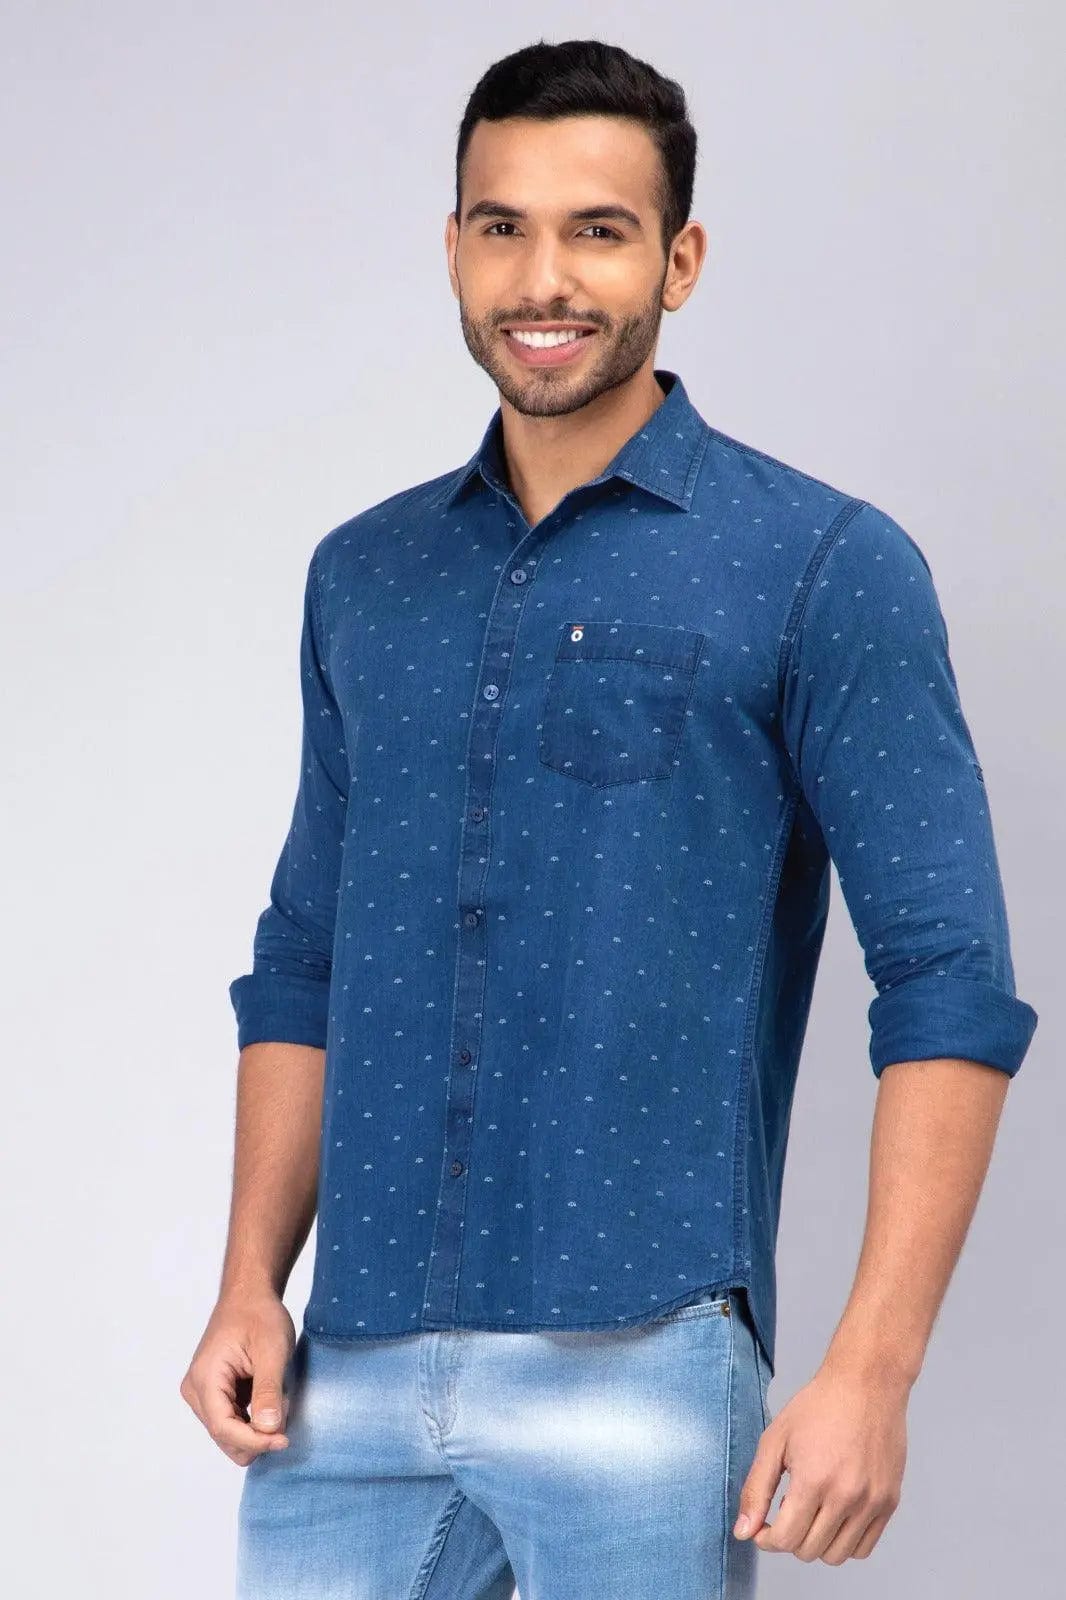 Jeans Shirts Denim Men Shirt | Denim Shirts Men Clothing | Casual Denim  Cotton Shirt - Shirts - Aliexpress